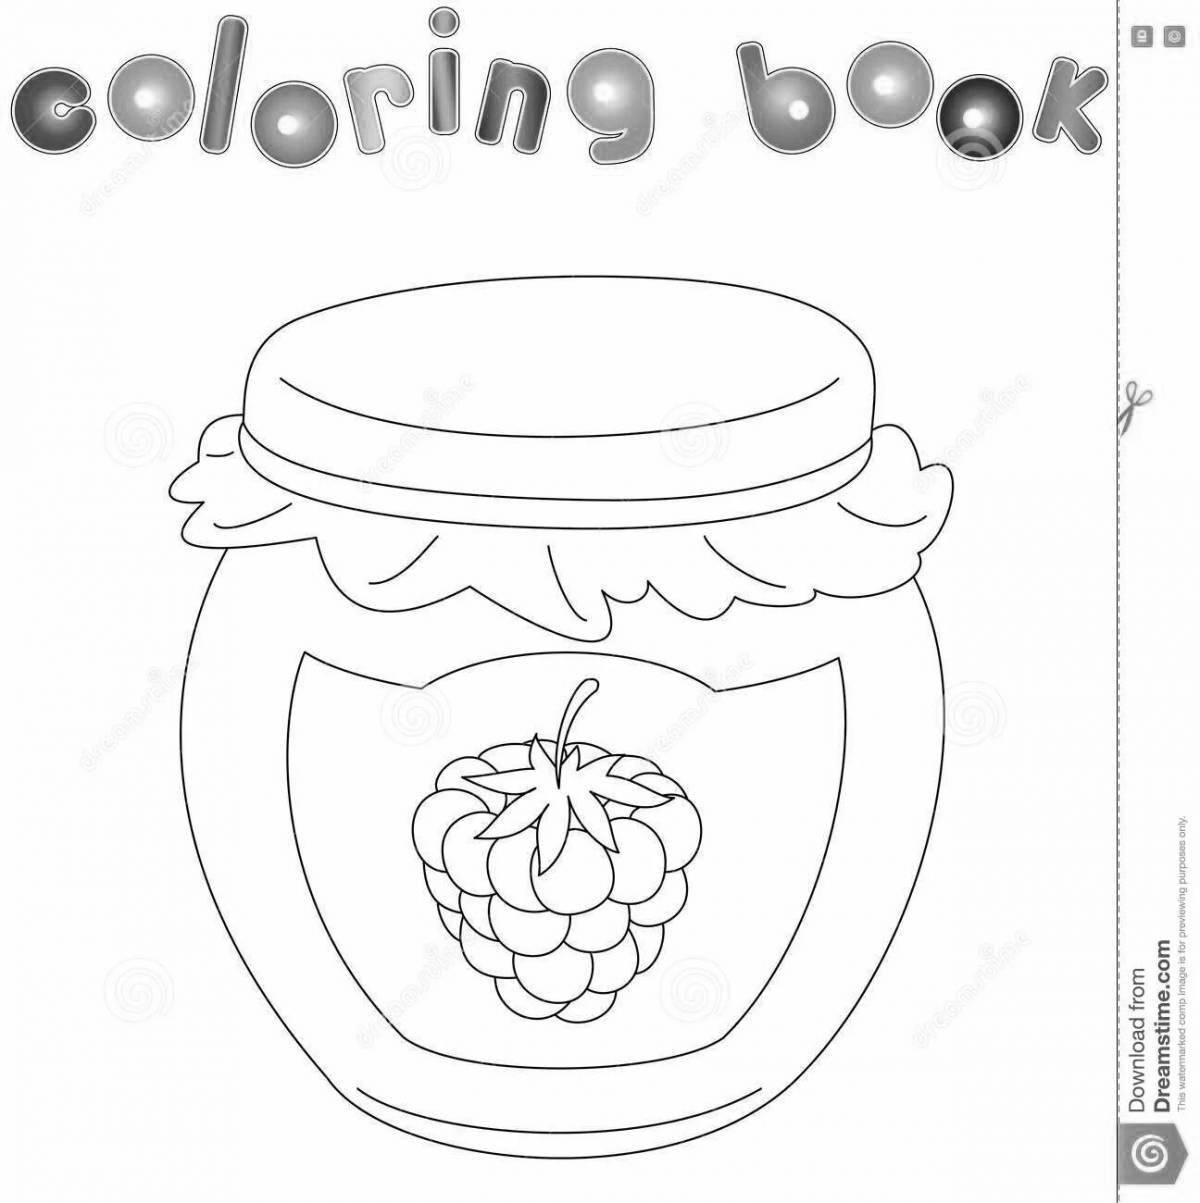 Inspiring jam coloring book for kids